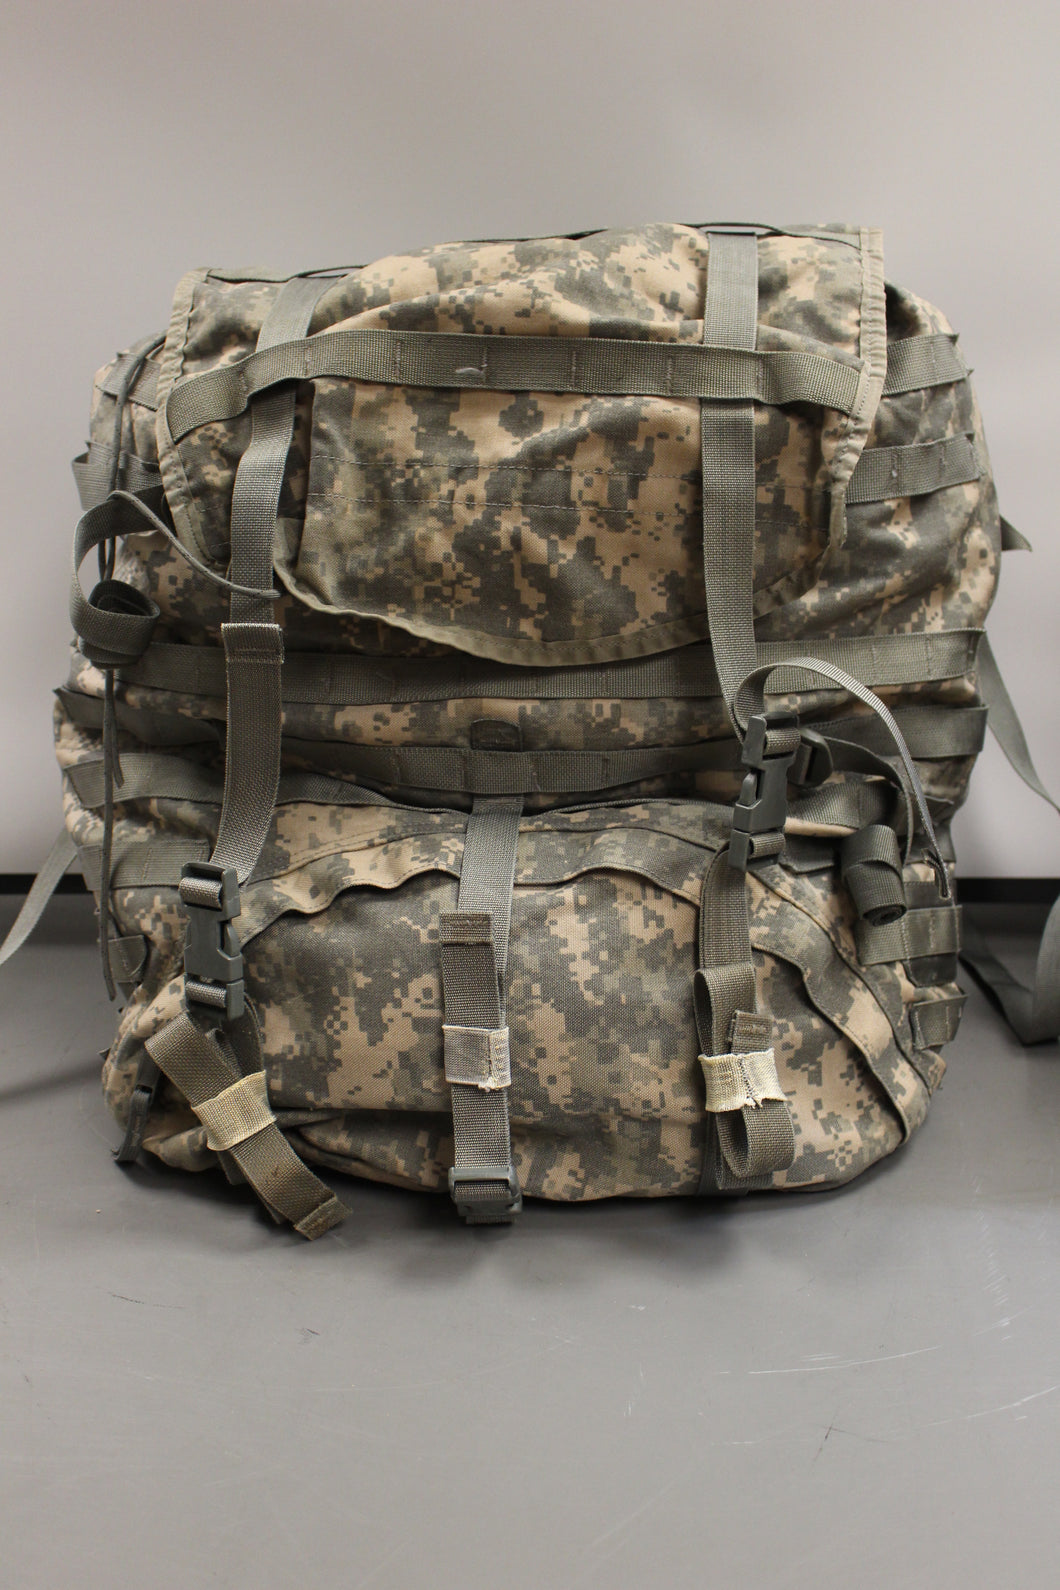 Molle II ACU Modular Lightweight Load-Carrying Equipment Rucksack Large Pack